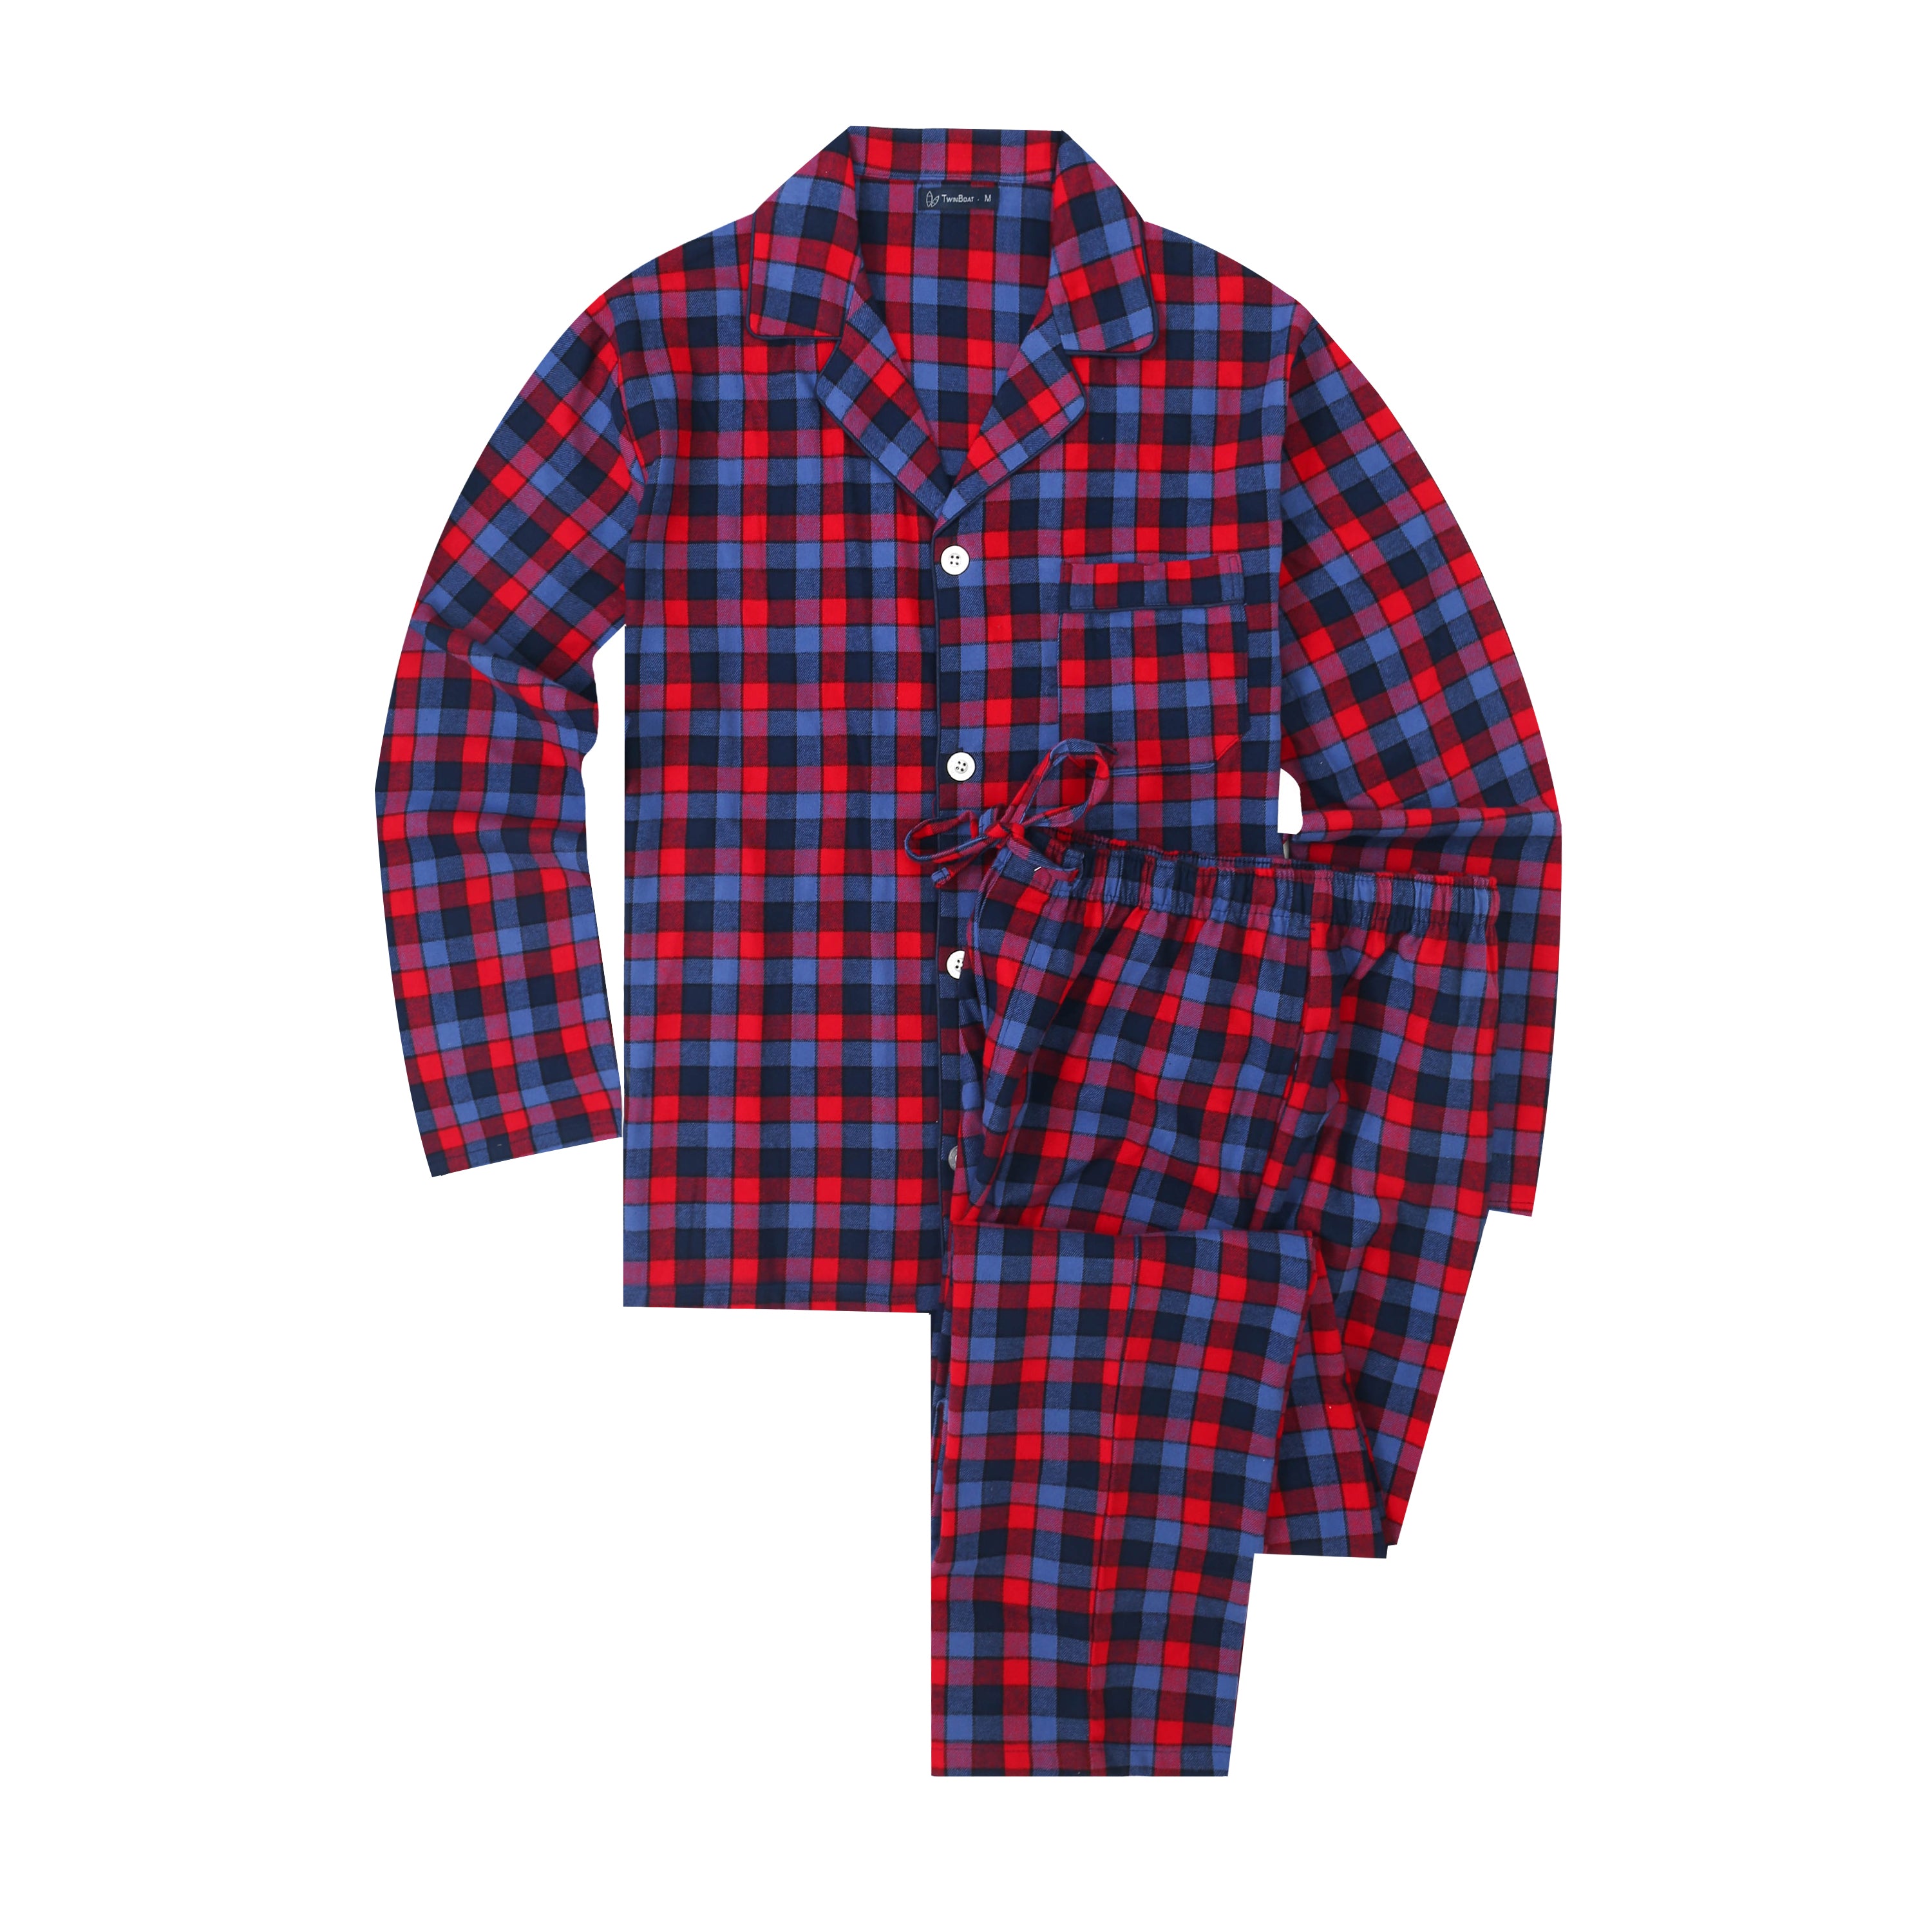 Mens Pajamas Set - 100% Cotton Flannel Pajamas for Men - Gradient Plaid Red-Blue